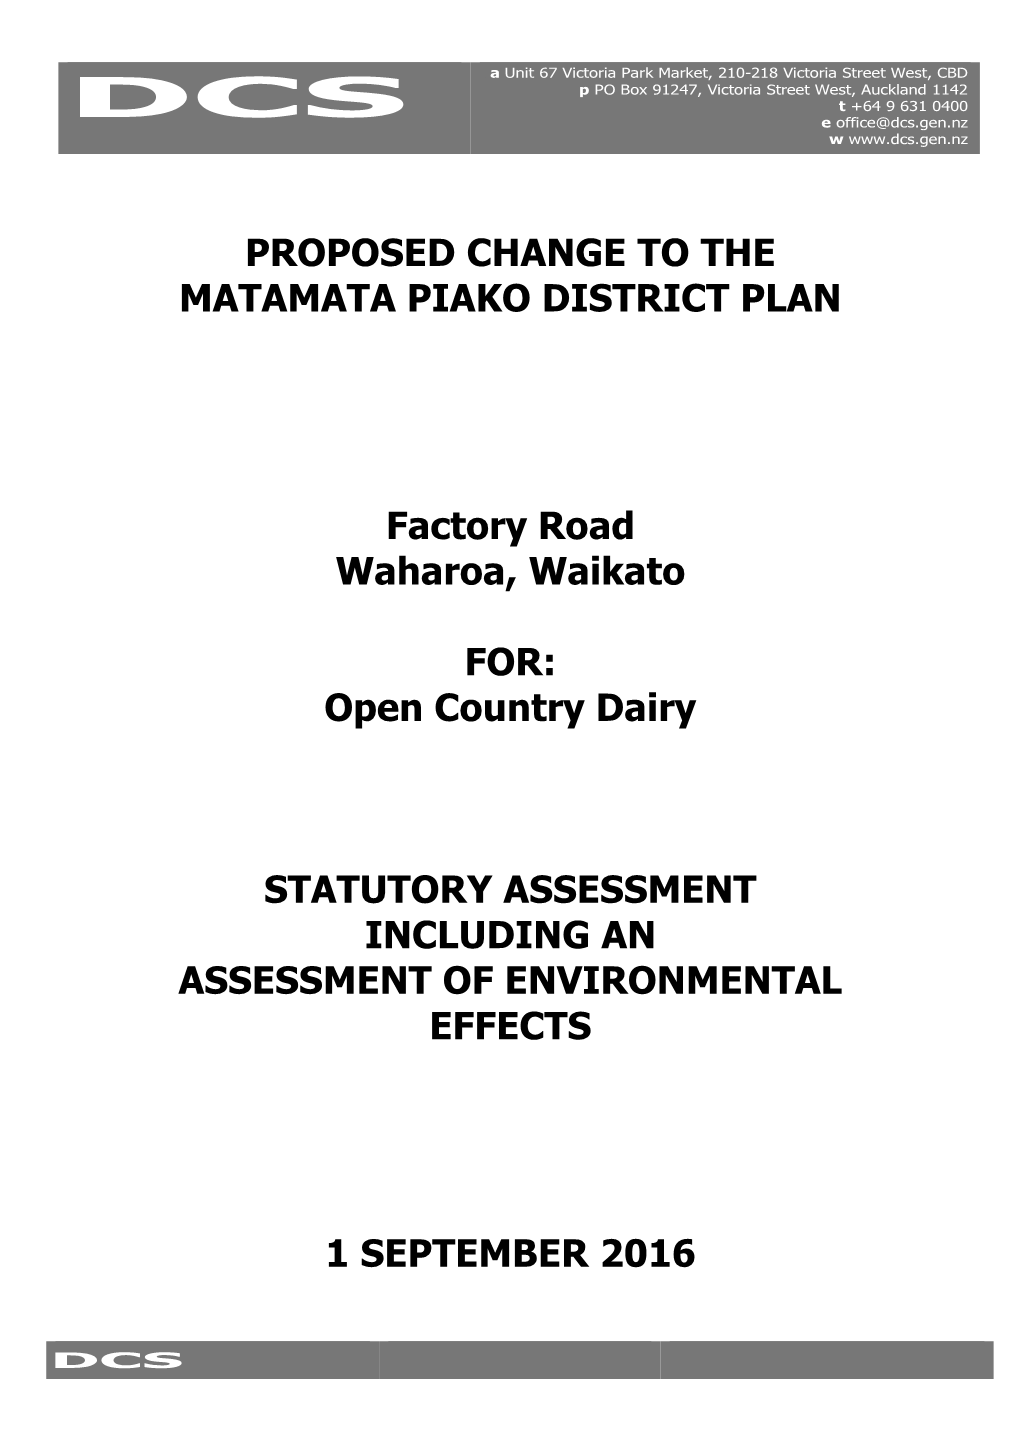 Statutory Assessment Including an Assessment of Environmental Effects